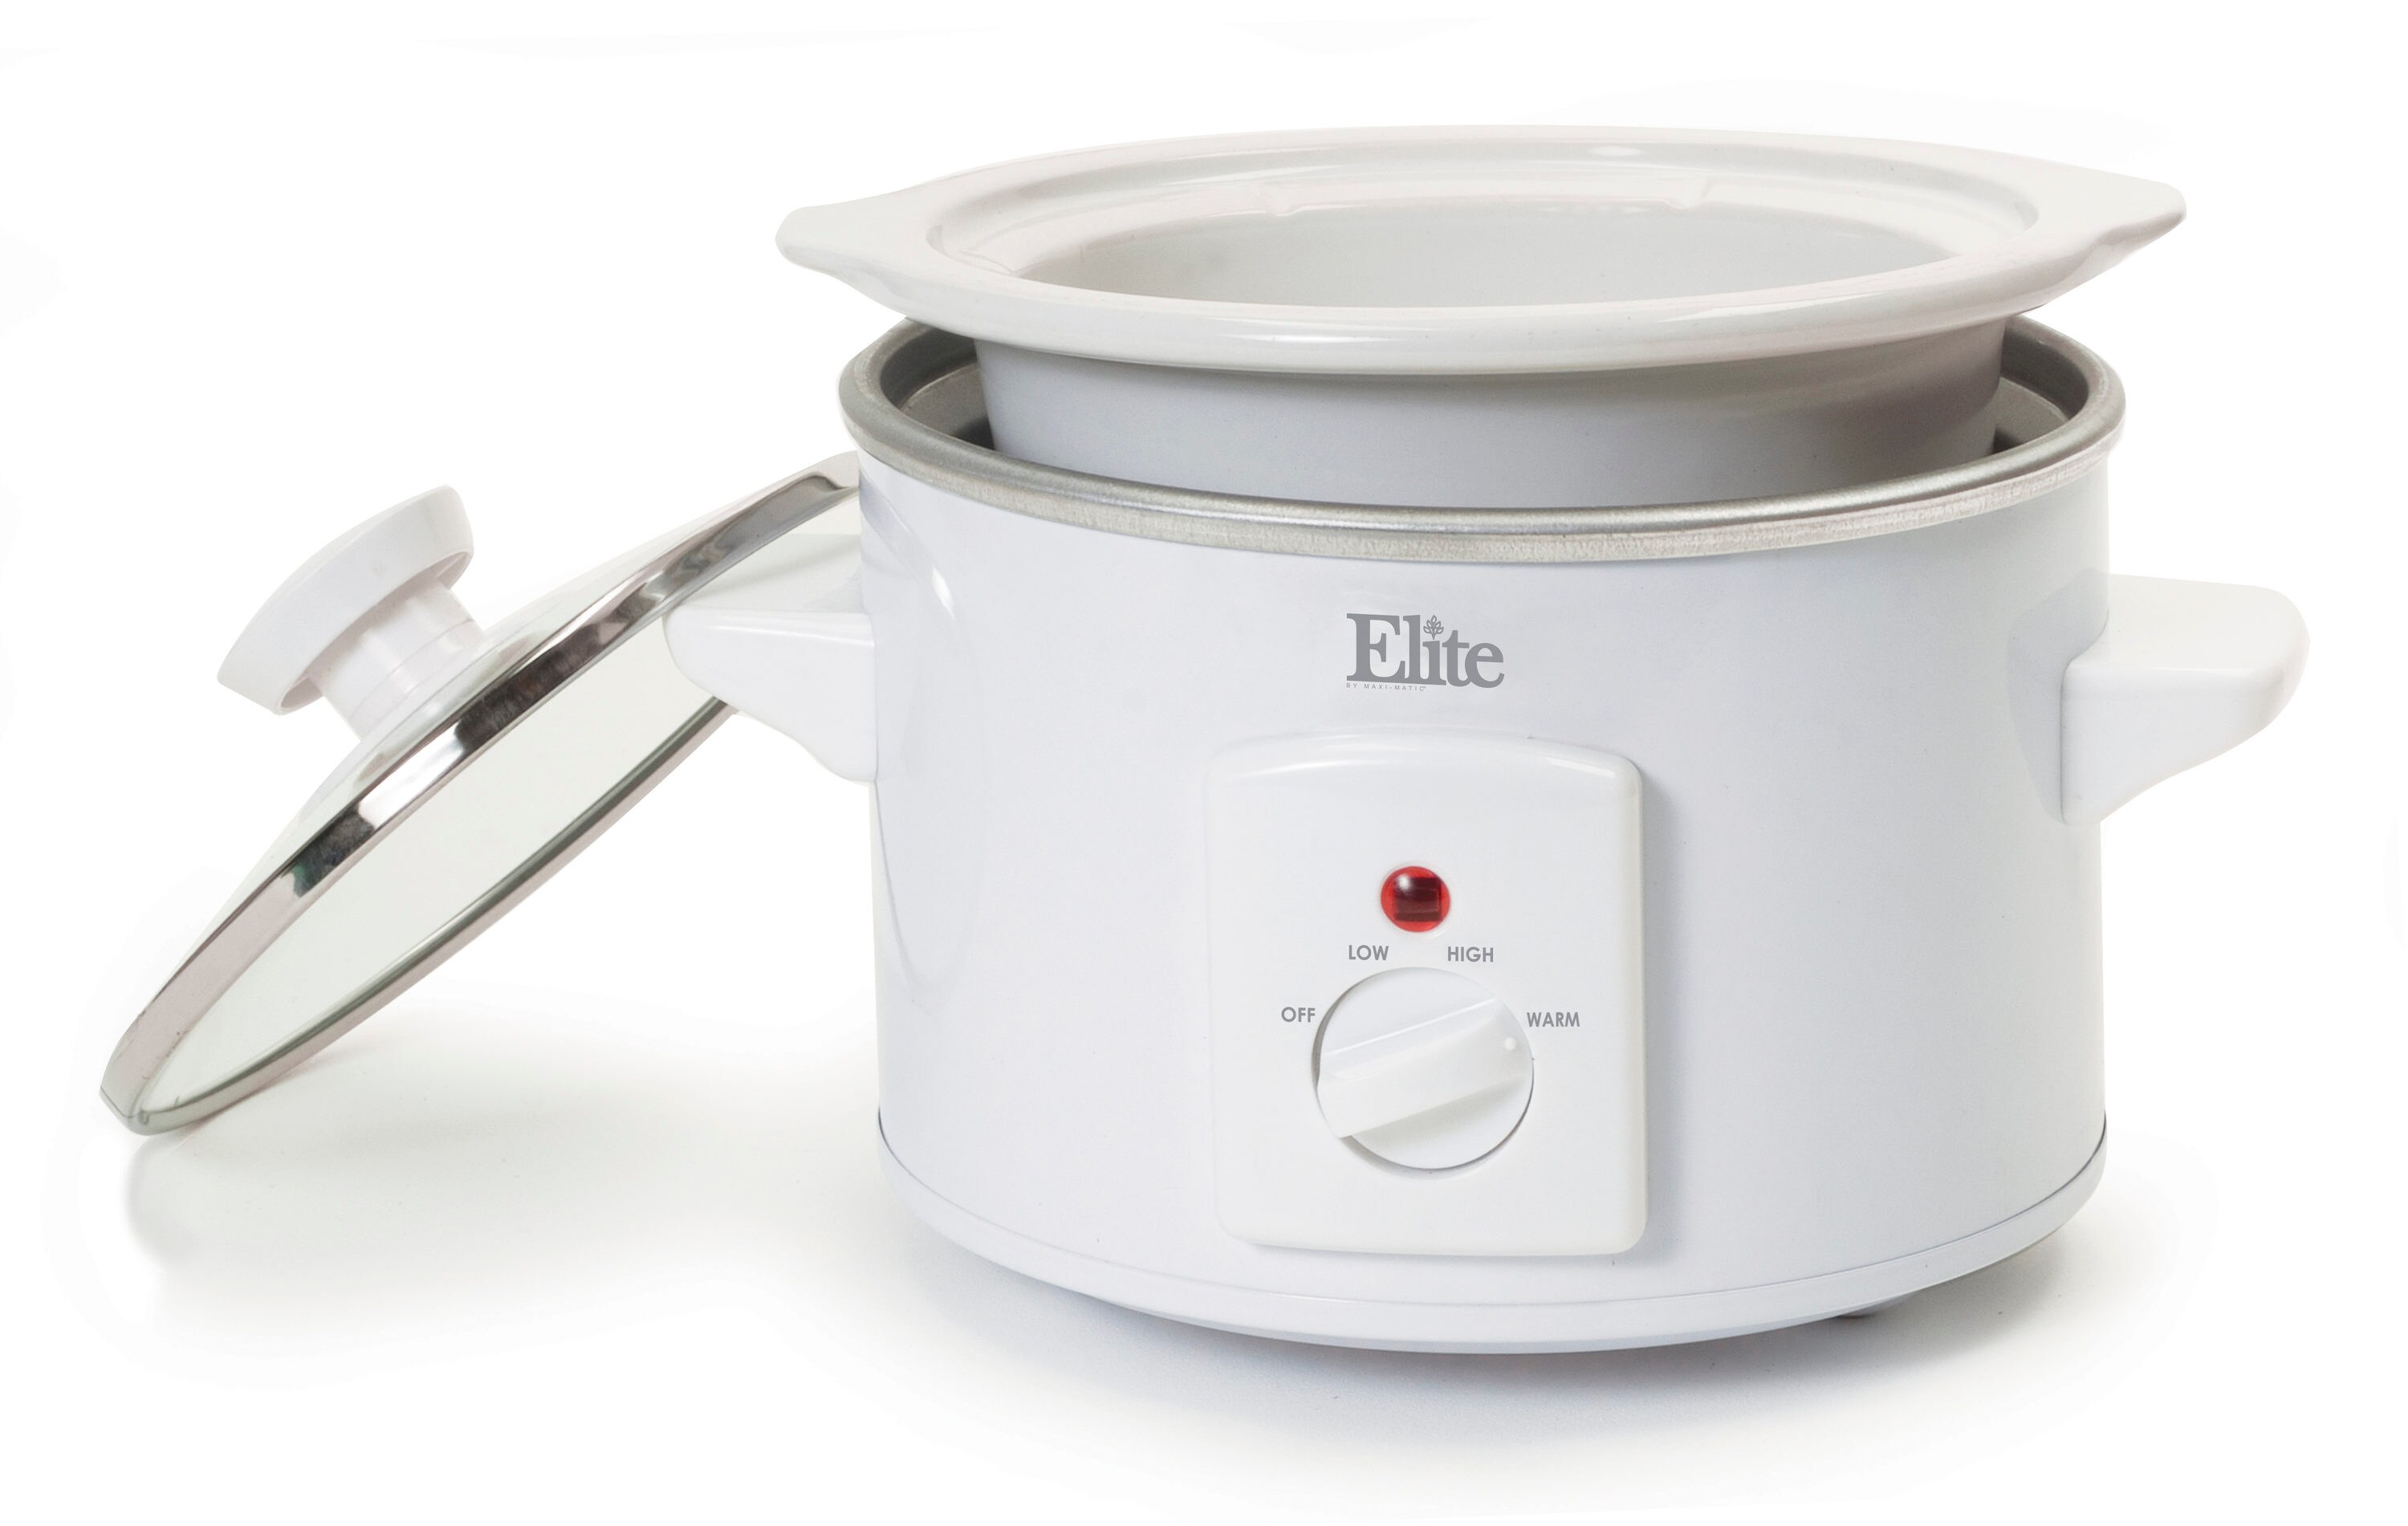 Elite Cuisine 1.5Qt. Mini Slow Cooker in Stainless Steel Mst-250xw